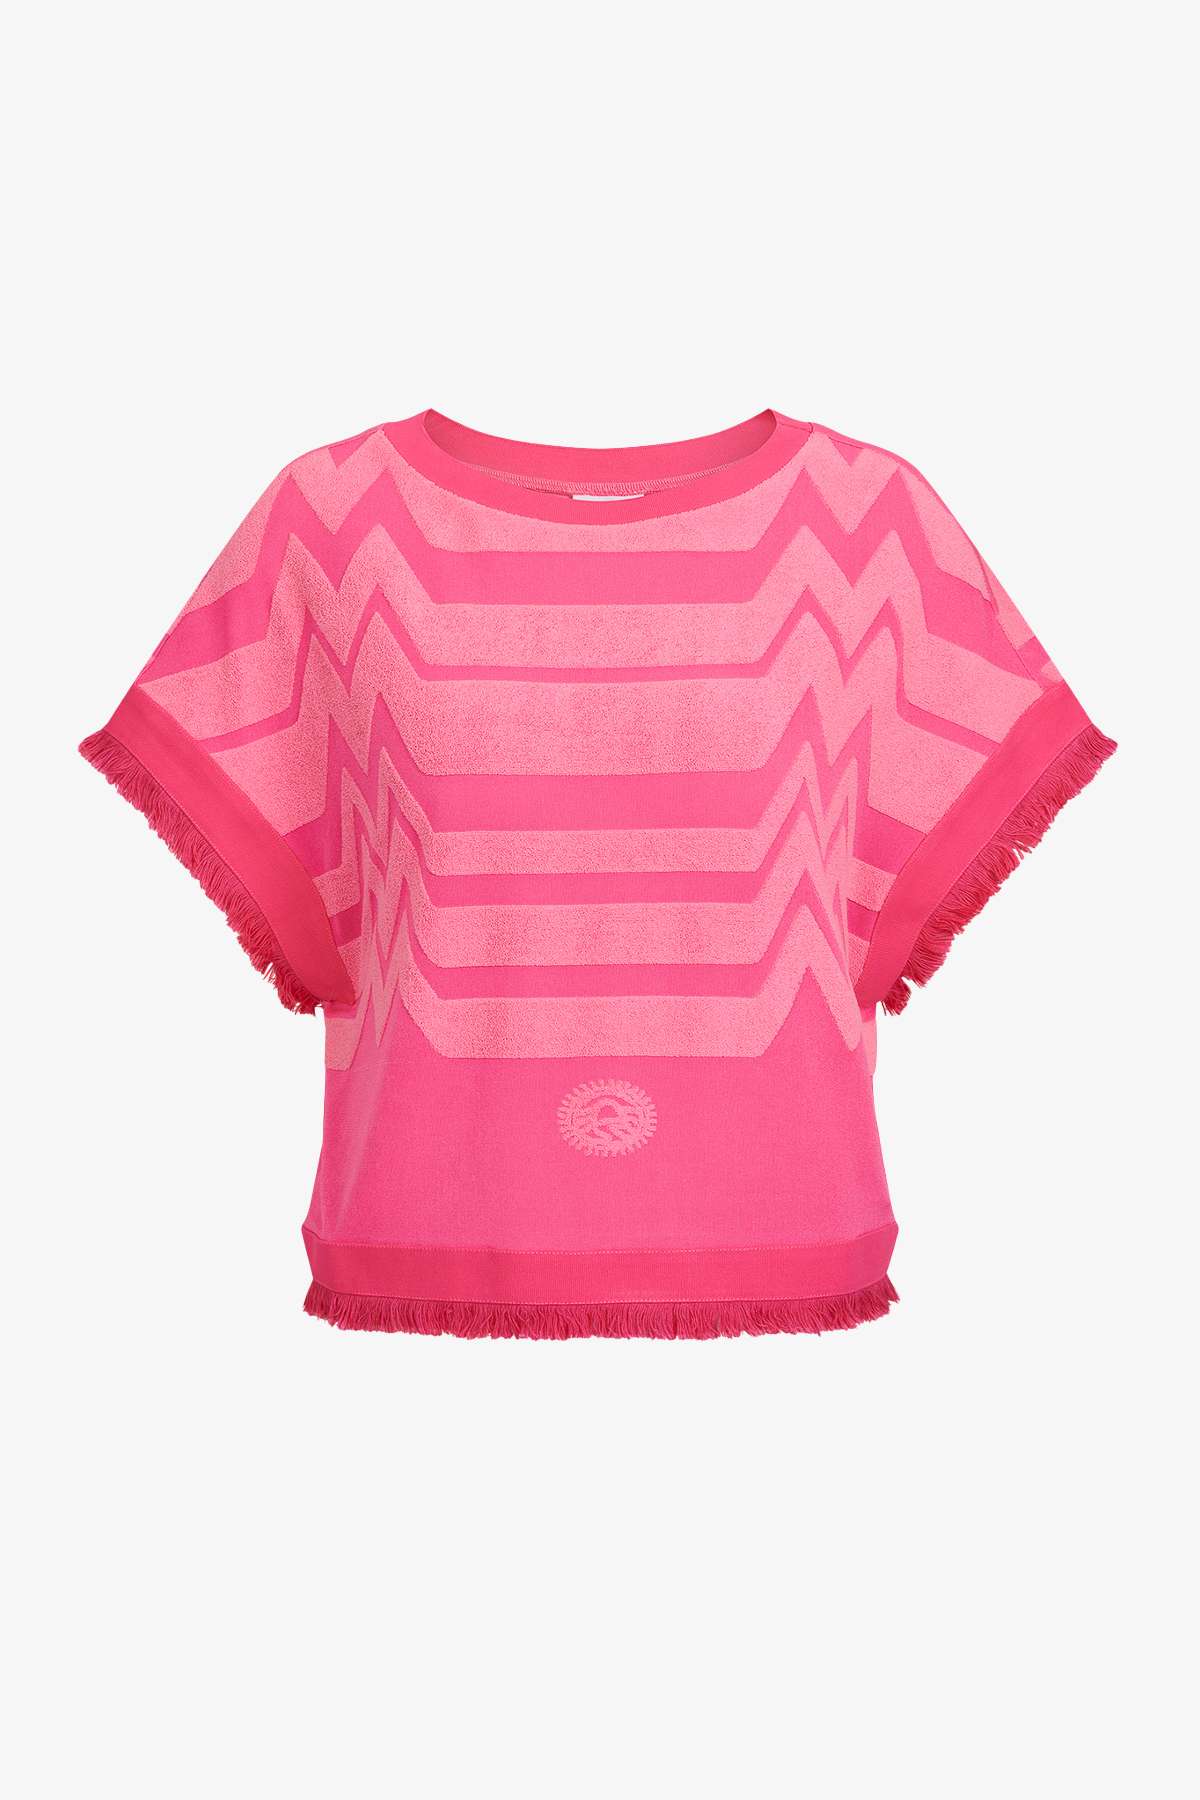 Sportalm tričko Tros candy pink Velikost: 40